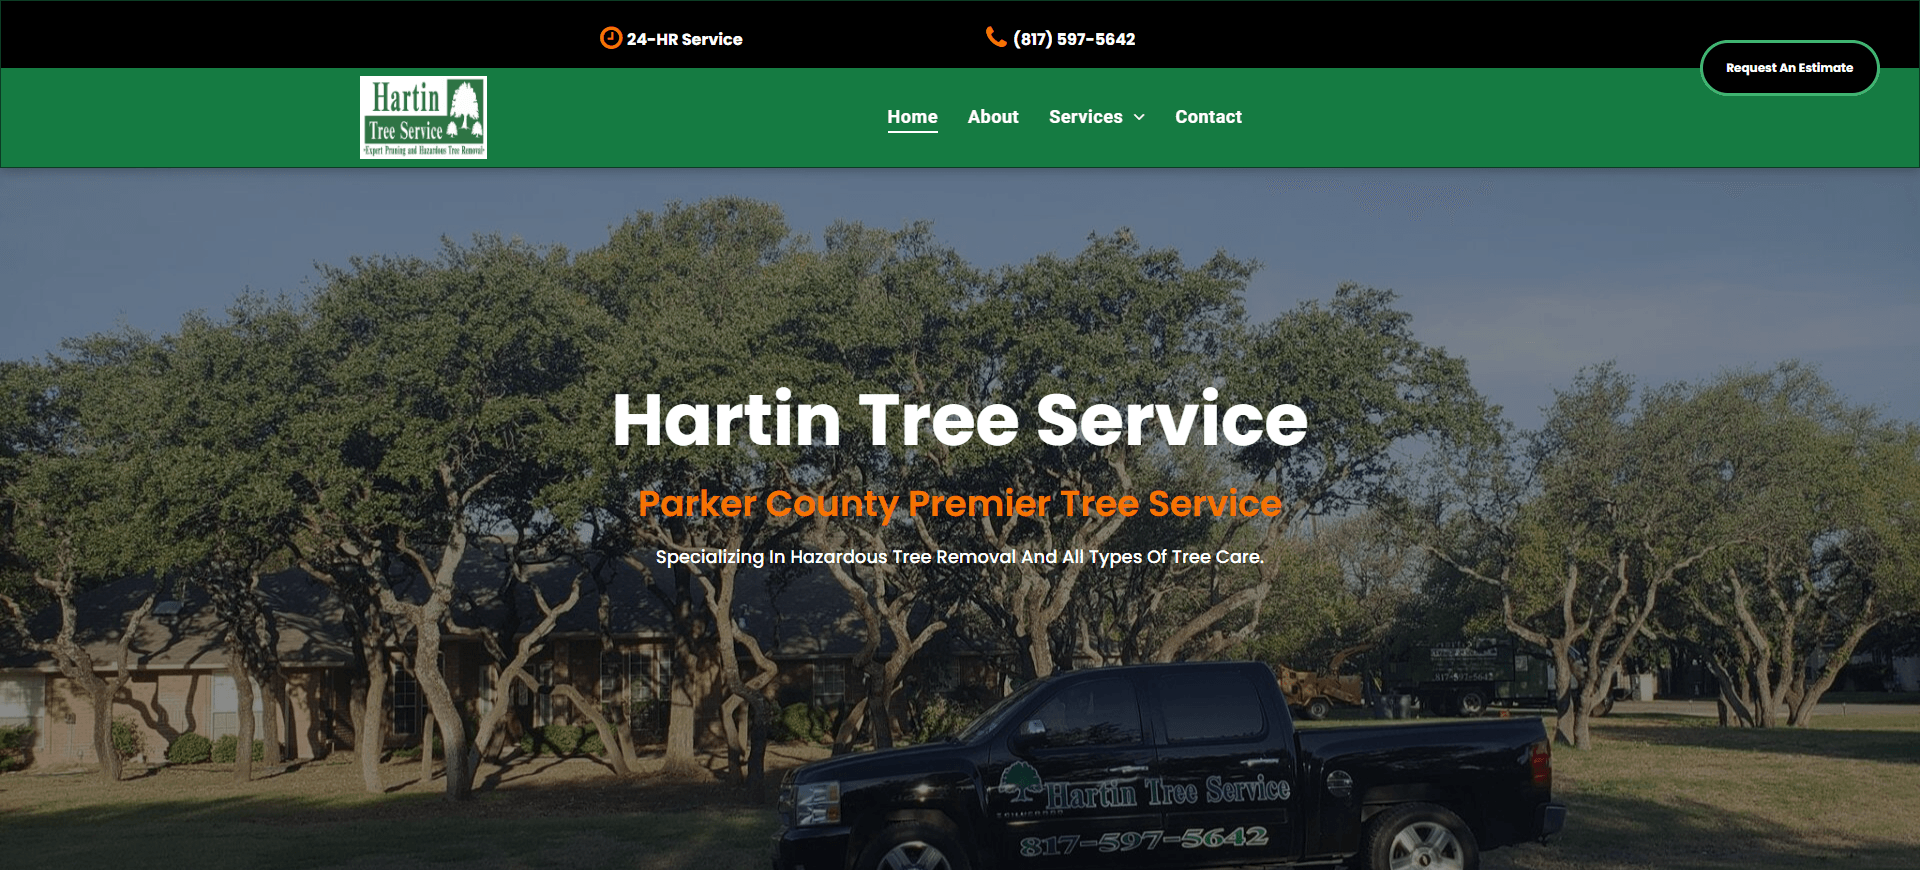 Hartin Tree Service - Web Design